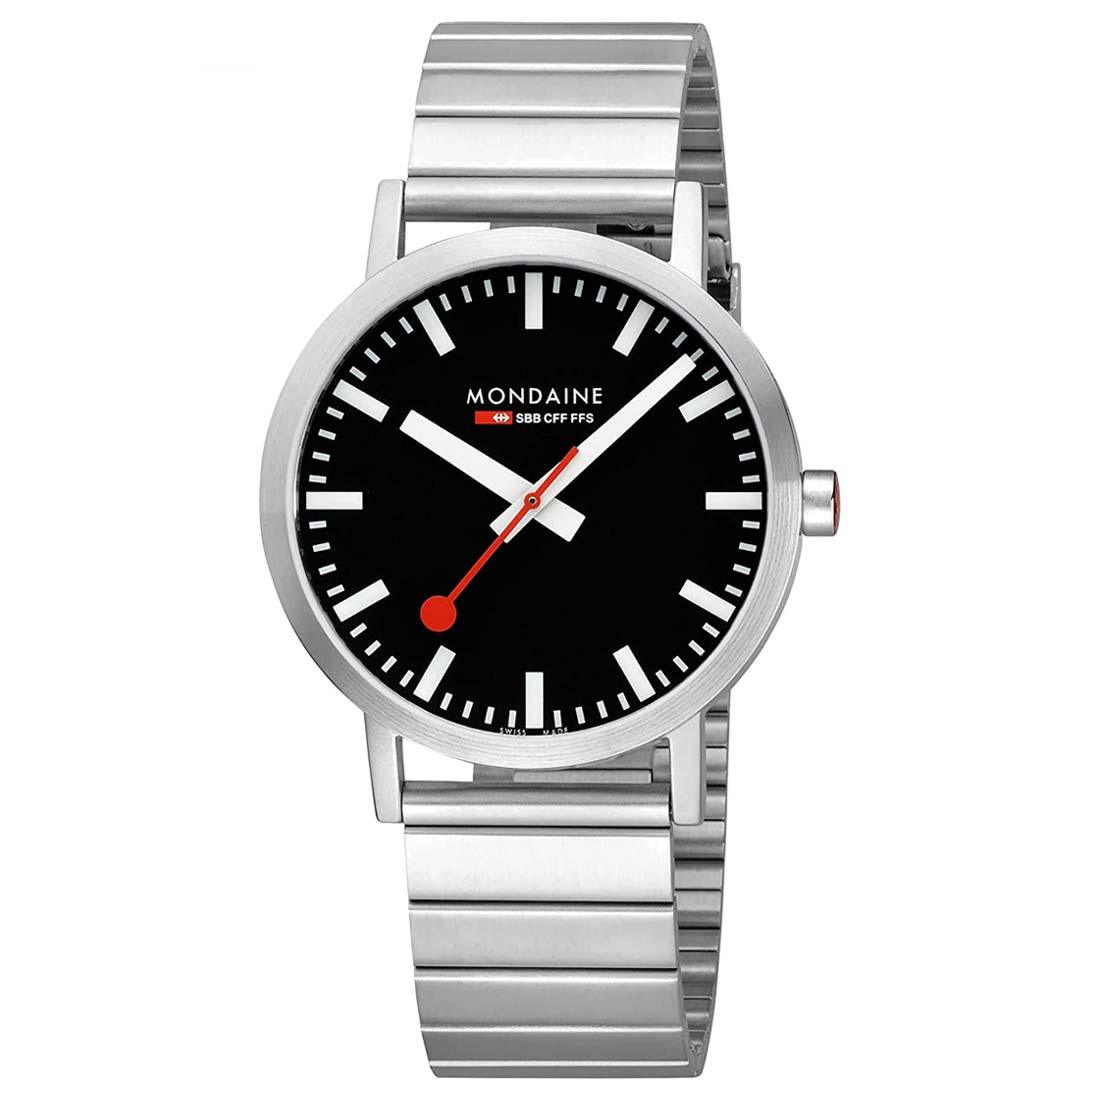 Mondaine Classic 40mm Watch A6603036016sbw